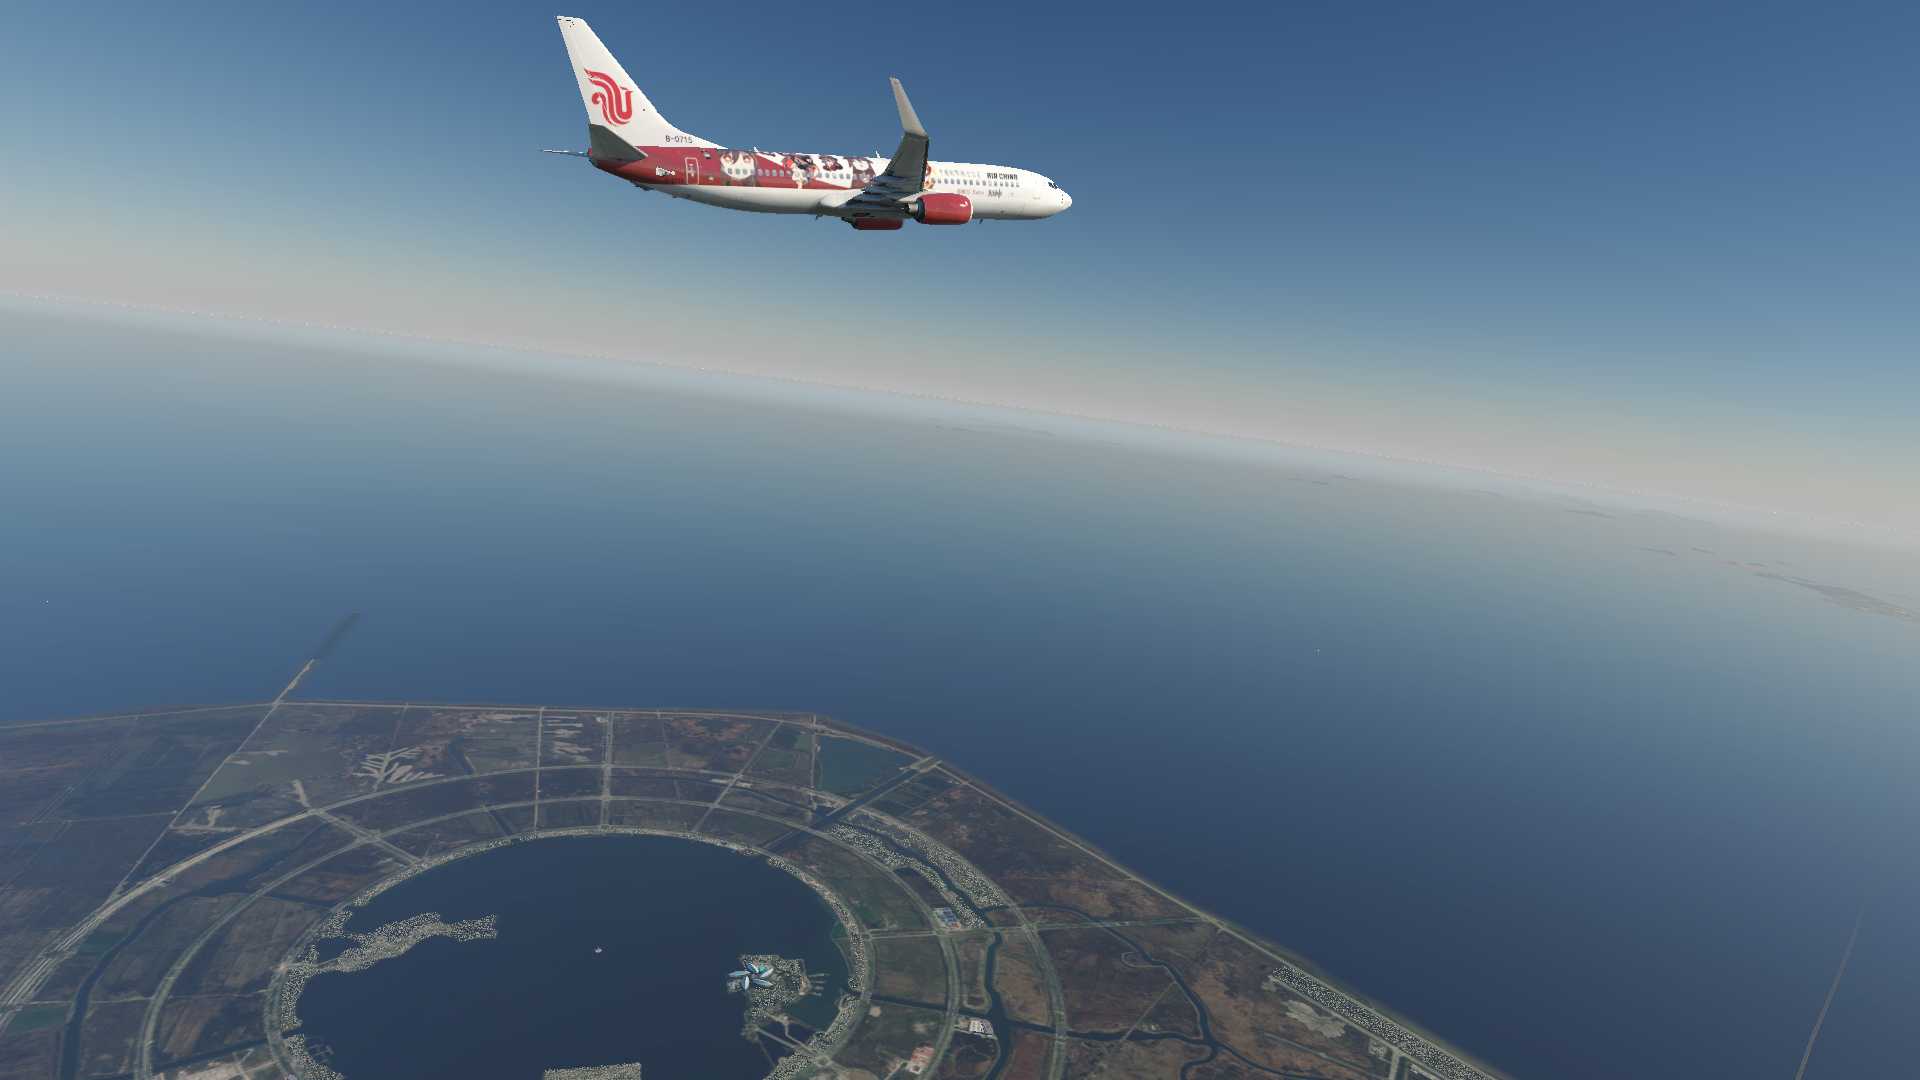 【X-Plane 11】航线上的风景-7519 